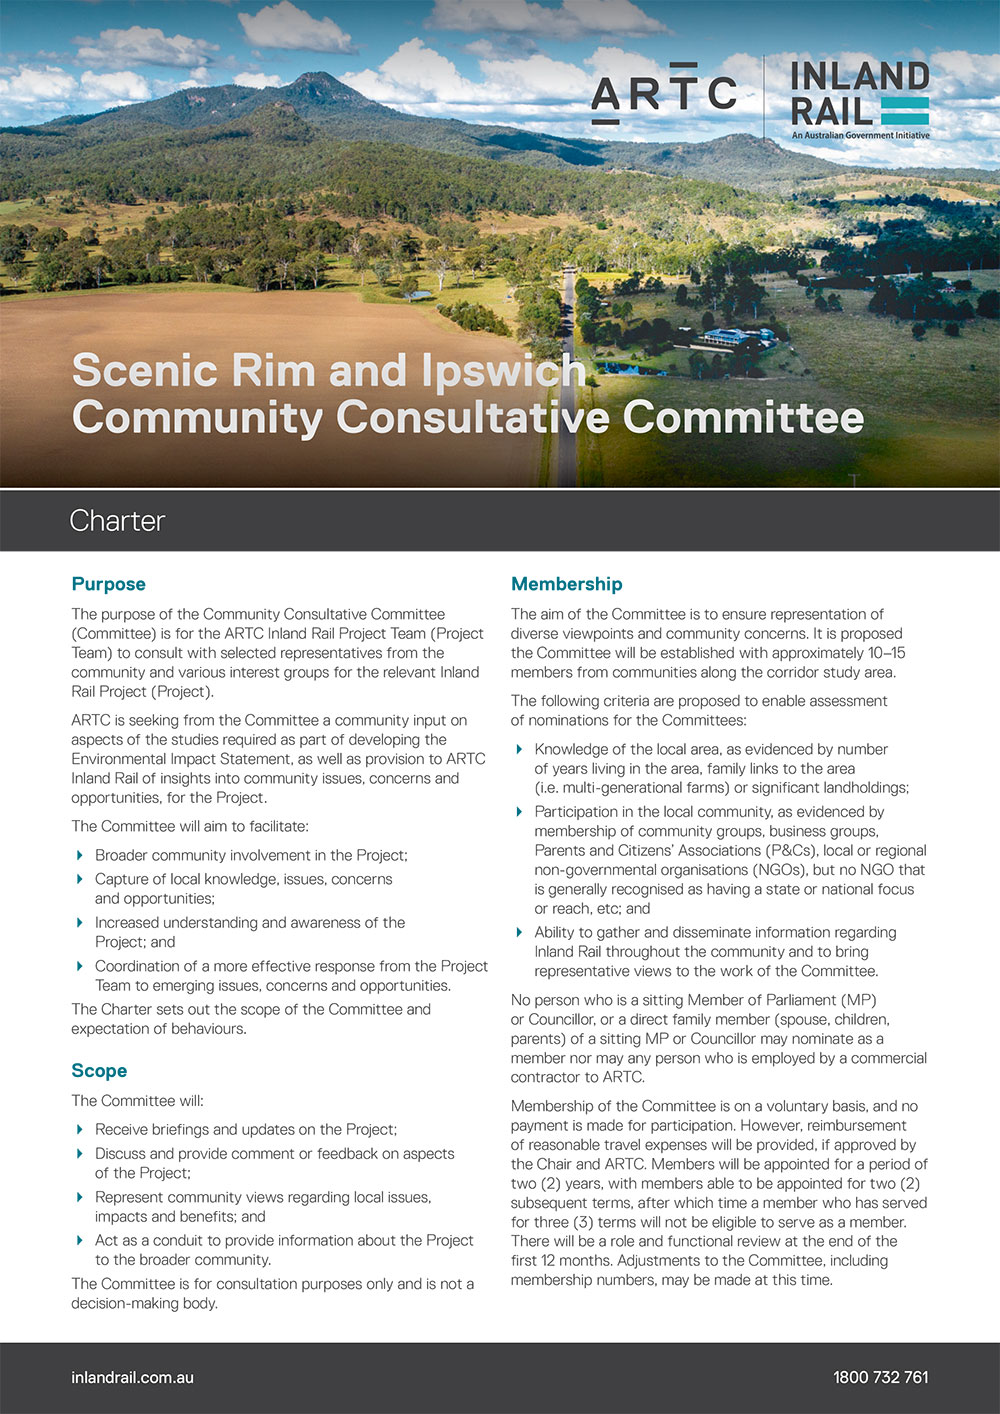 Thumbnail image of Scenic Rim Community Consultative Committee Charter document